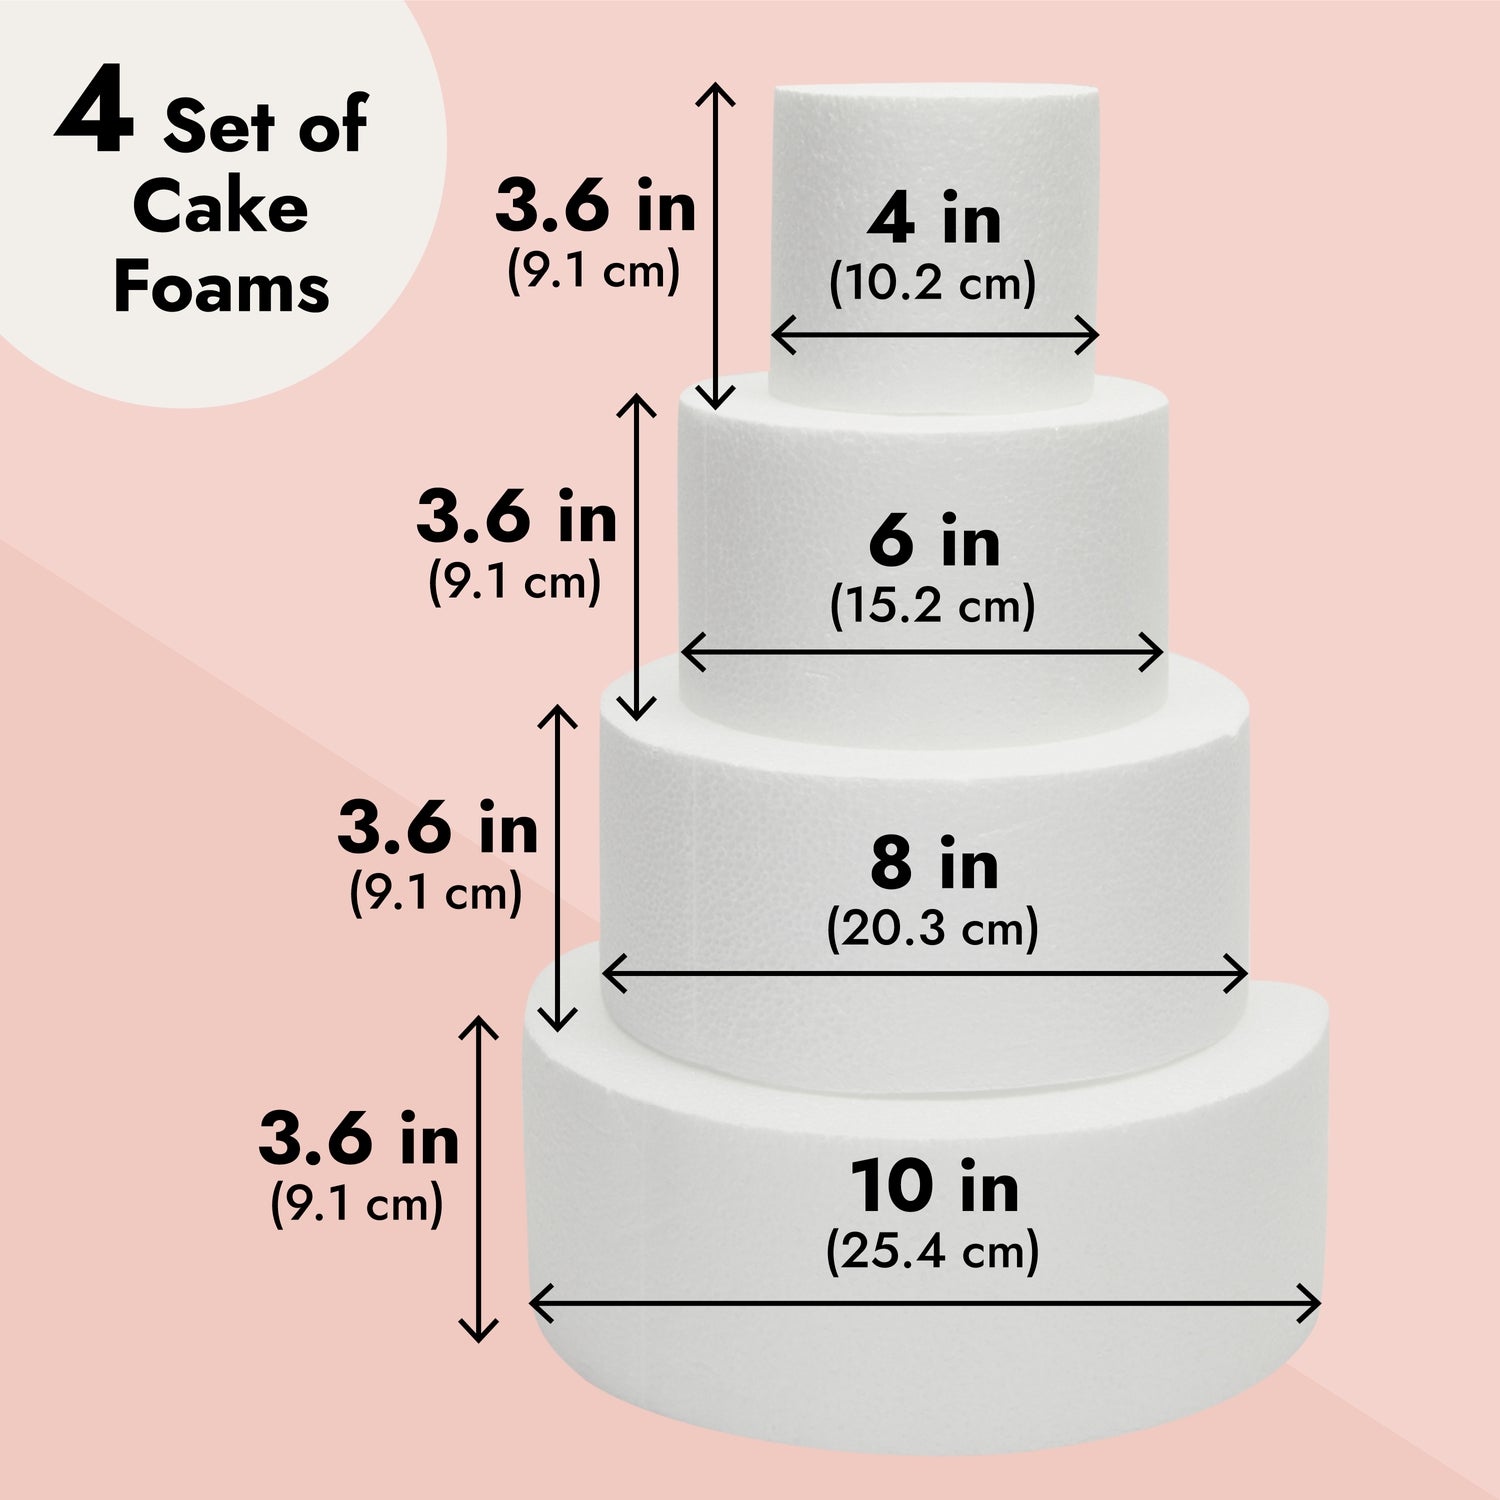 4 Piece White Round Cake Dummy Tier Set, Foam Fake Cake in 4 Sizes for  Decorating and Crafts, Baking Displays, Wedding Cake Design, Birthday  Cakes